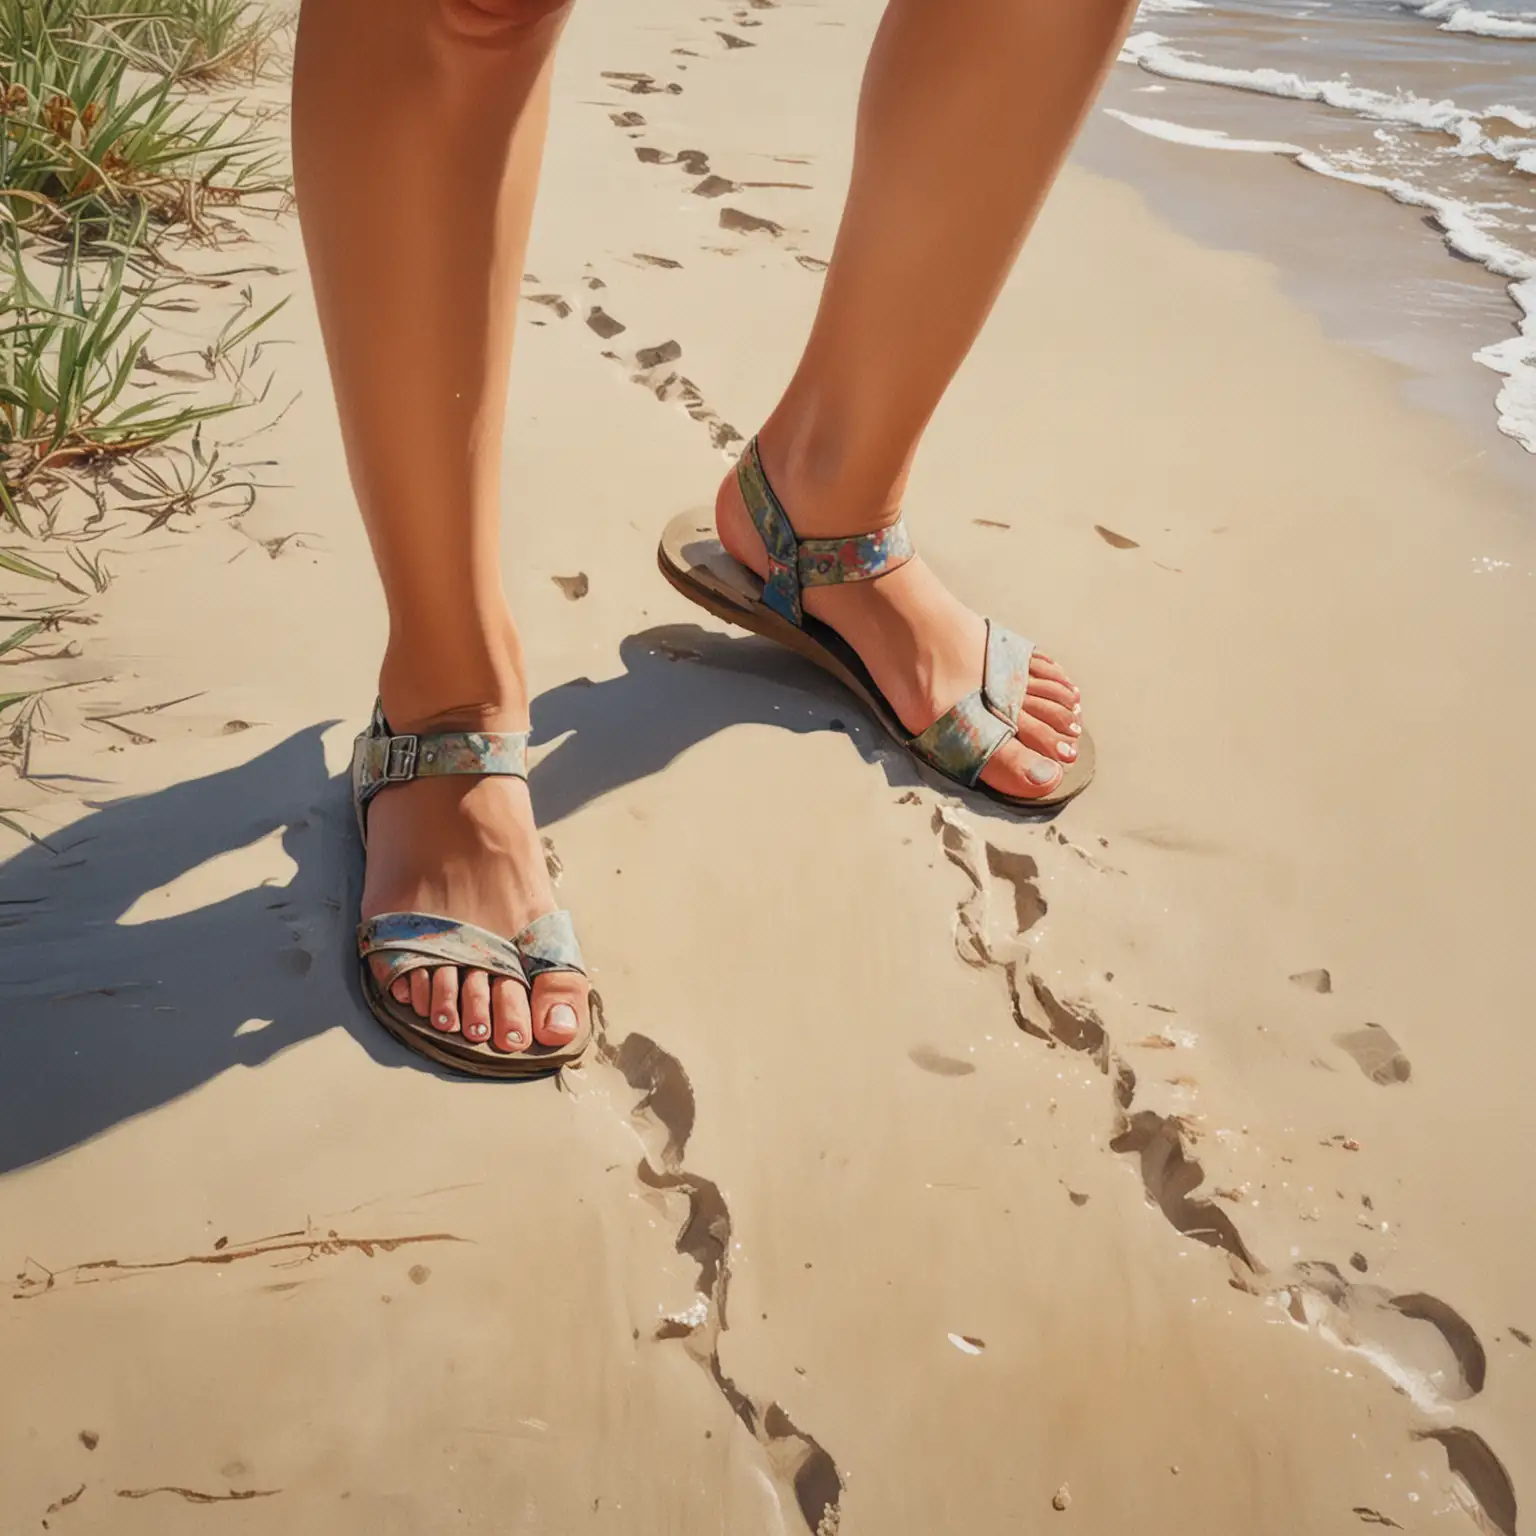 Woman Walking on Sandy Beach Path in Sandals